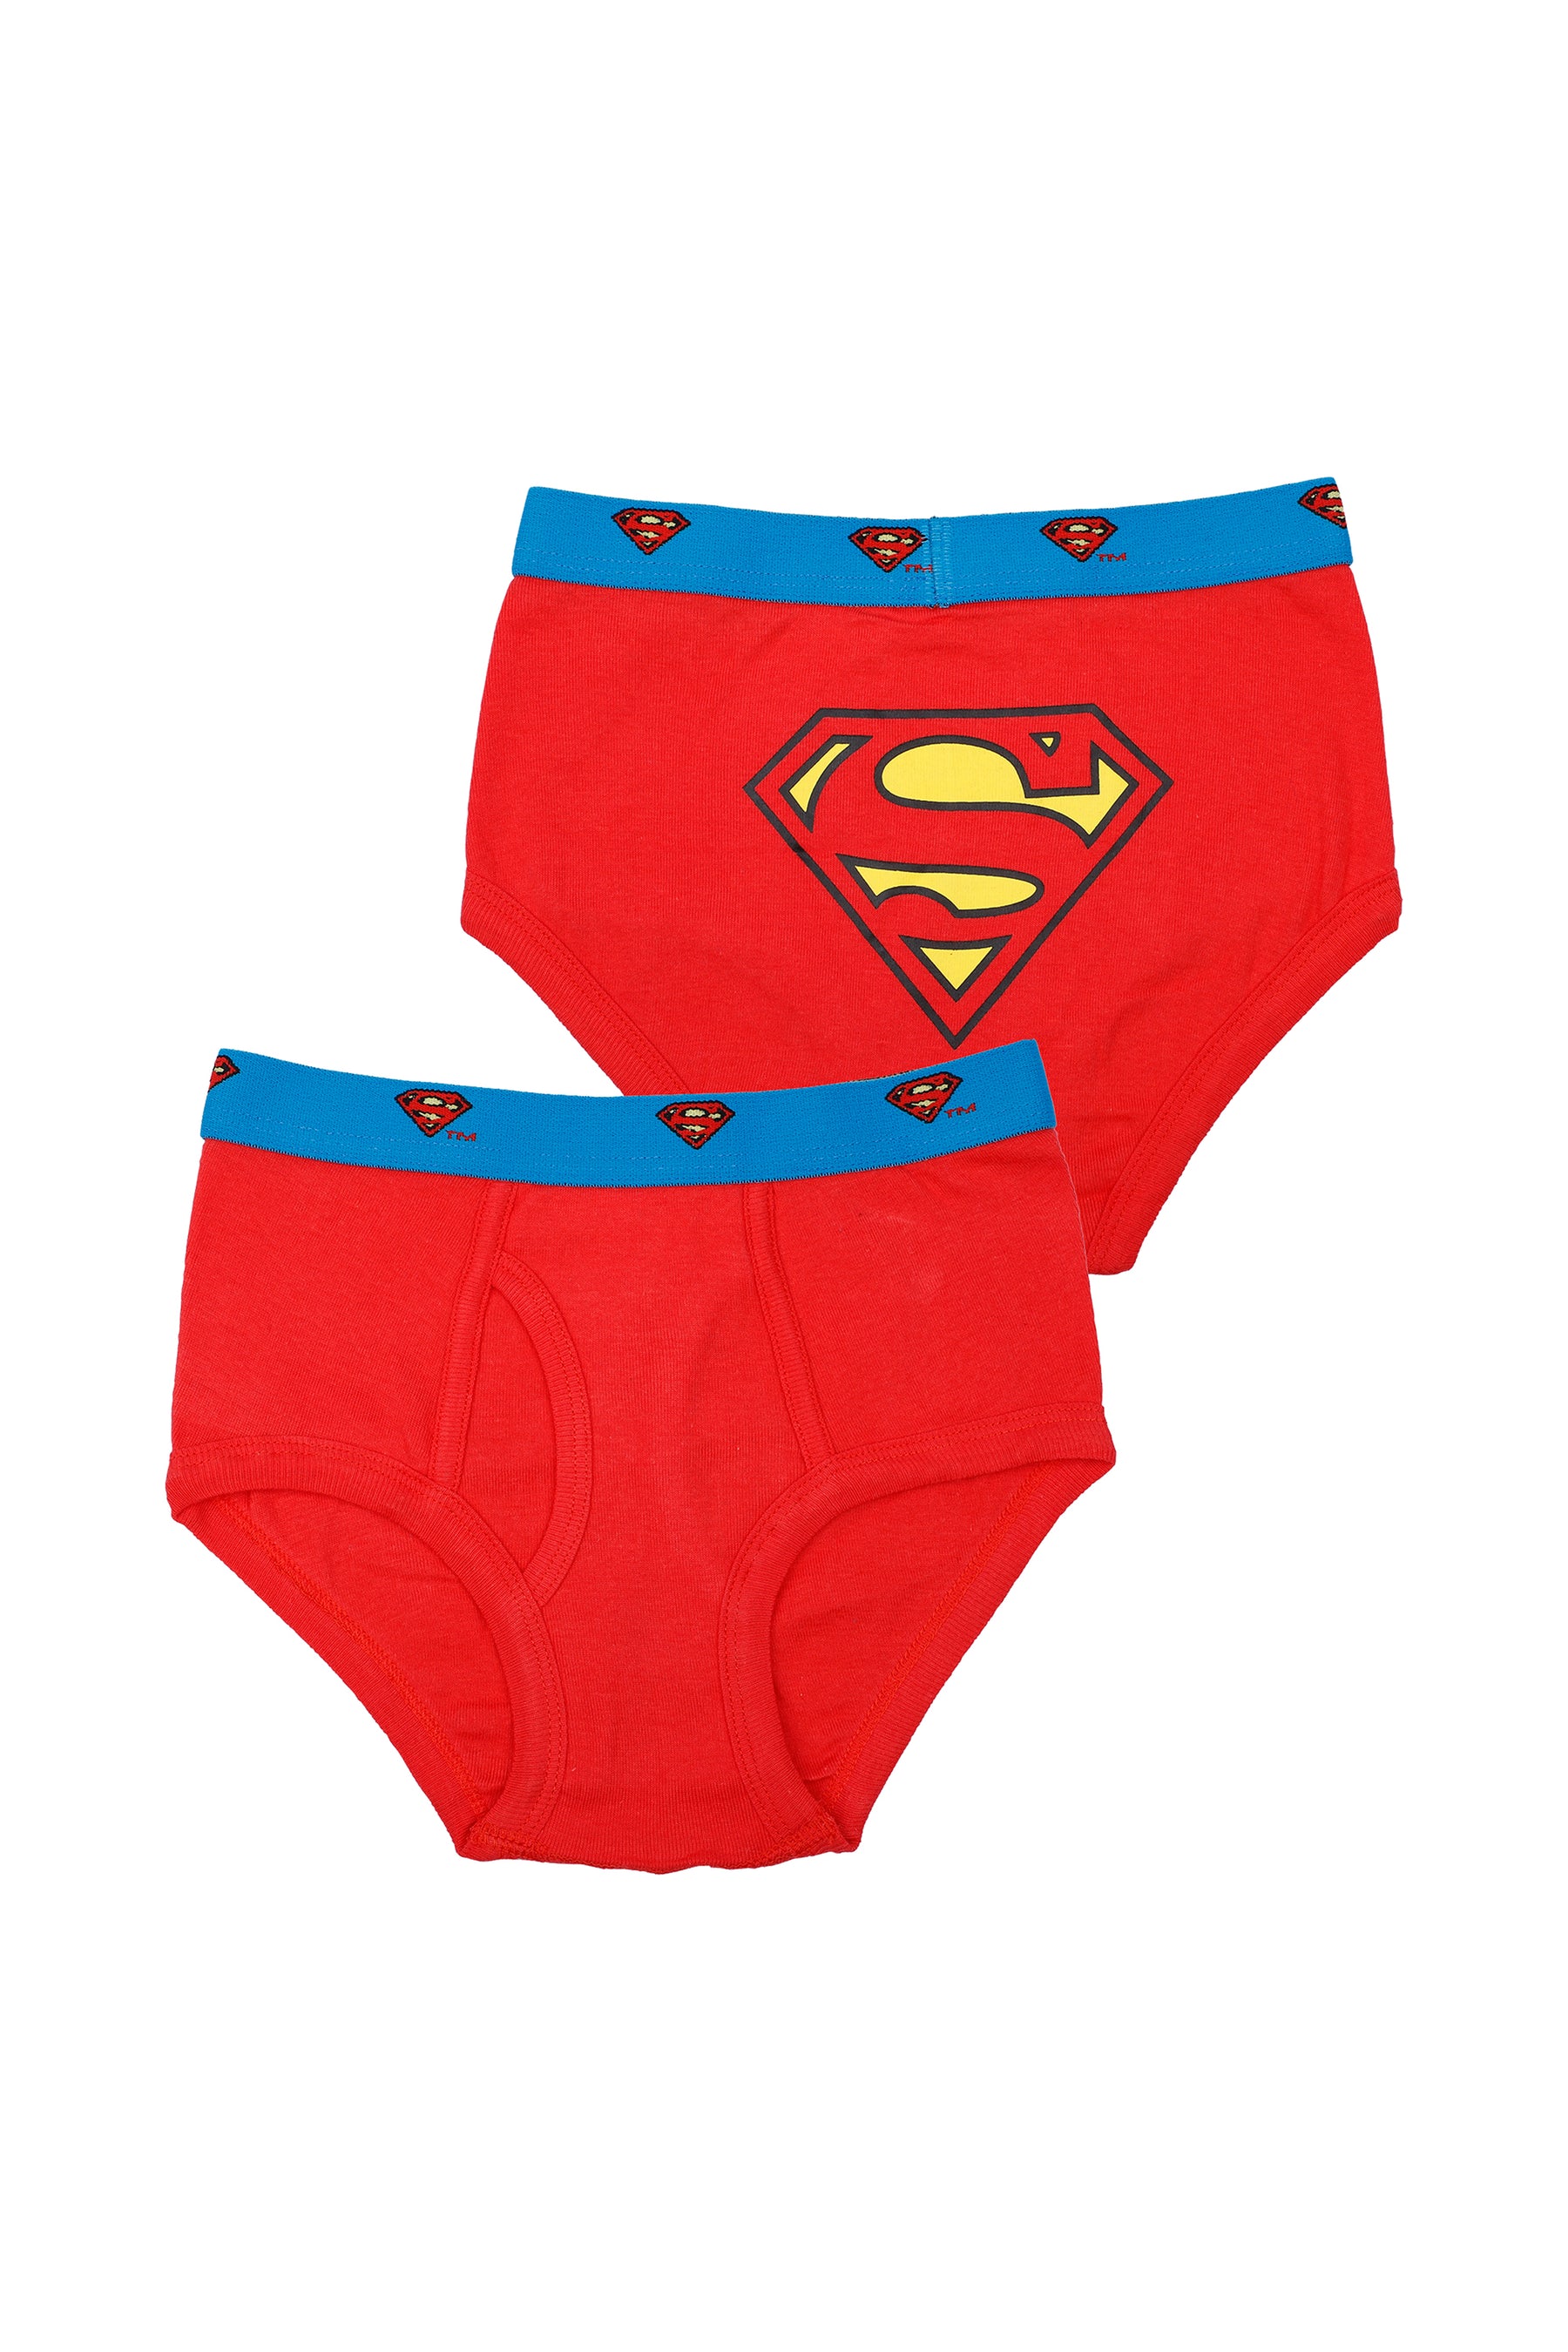  DC Comics Justice League MultiCharacter Underwear